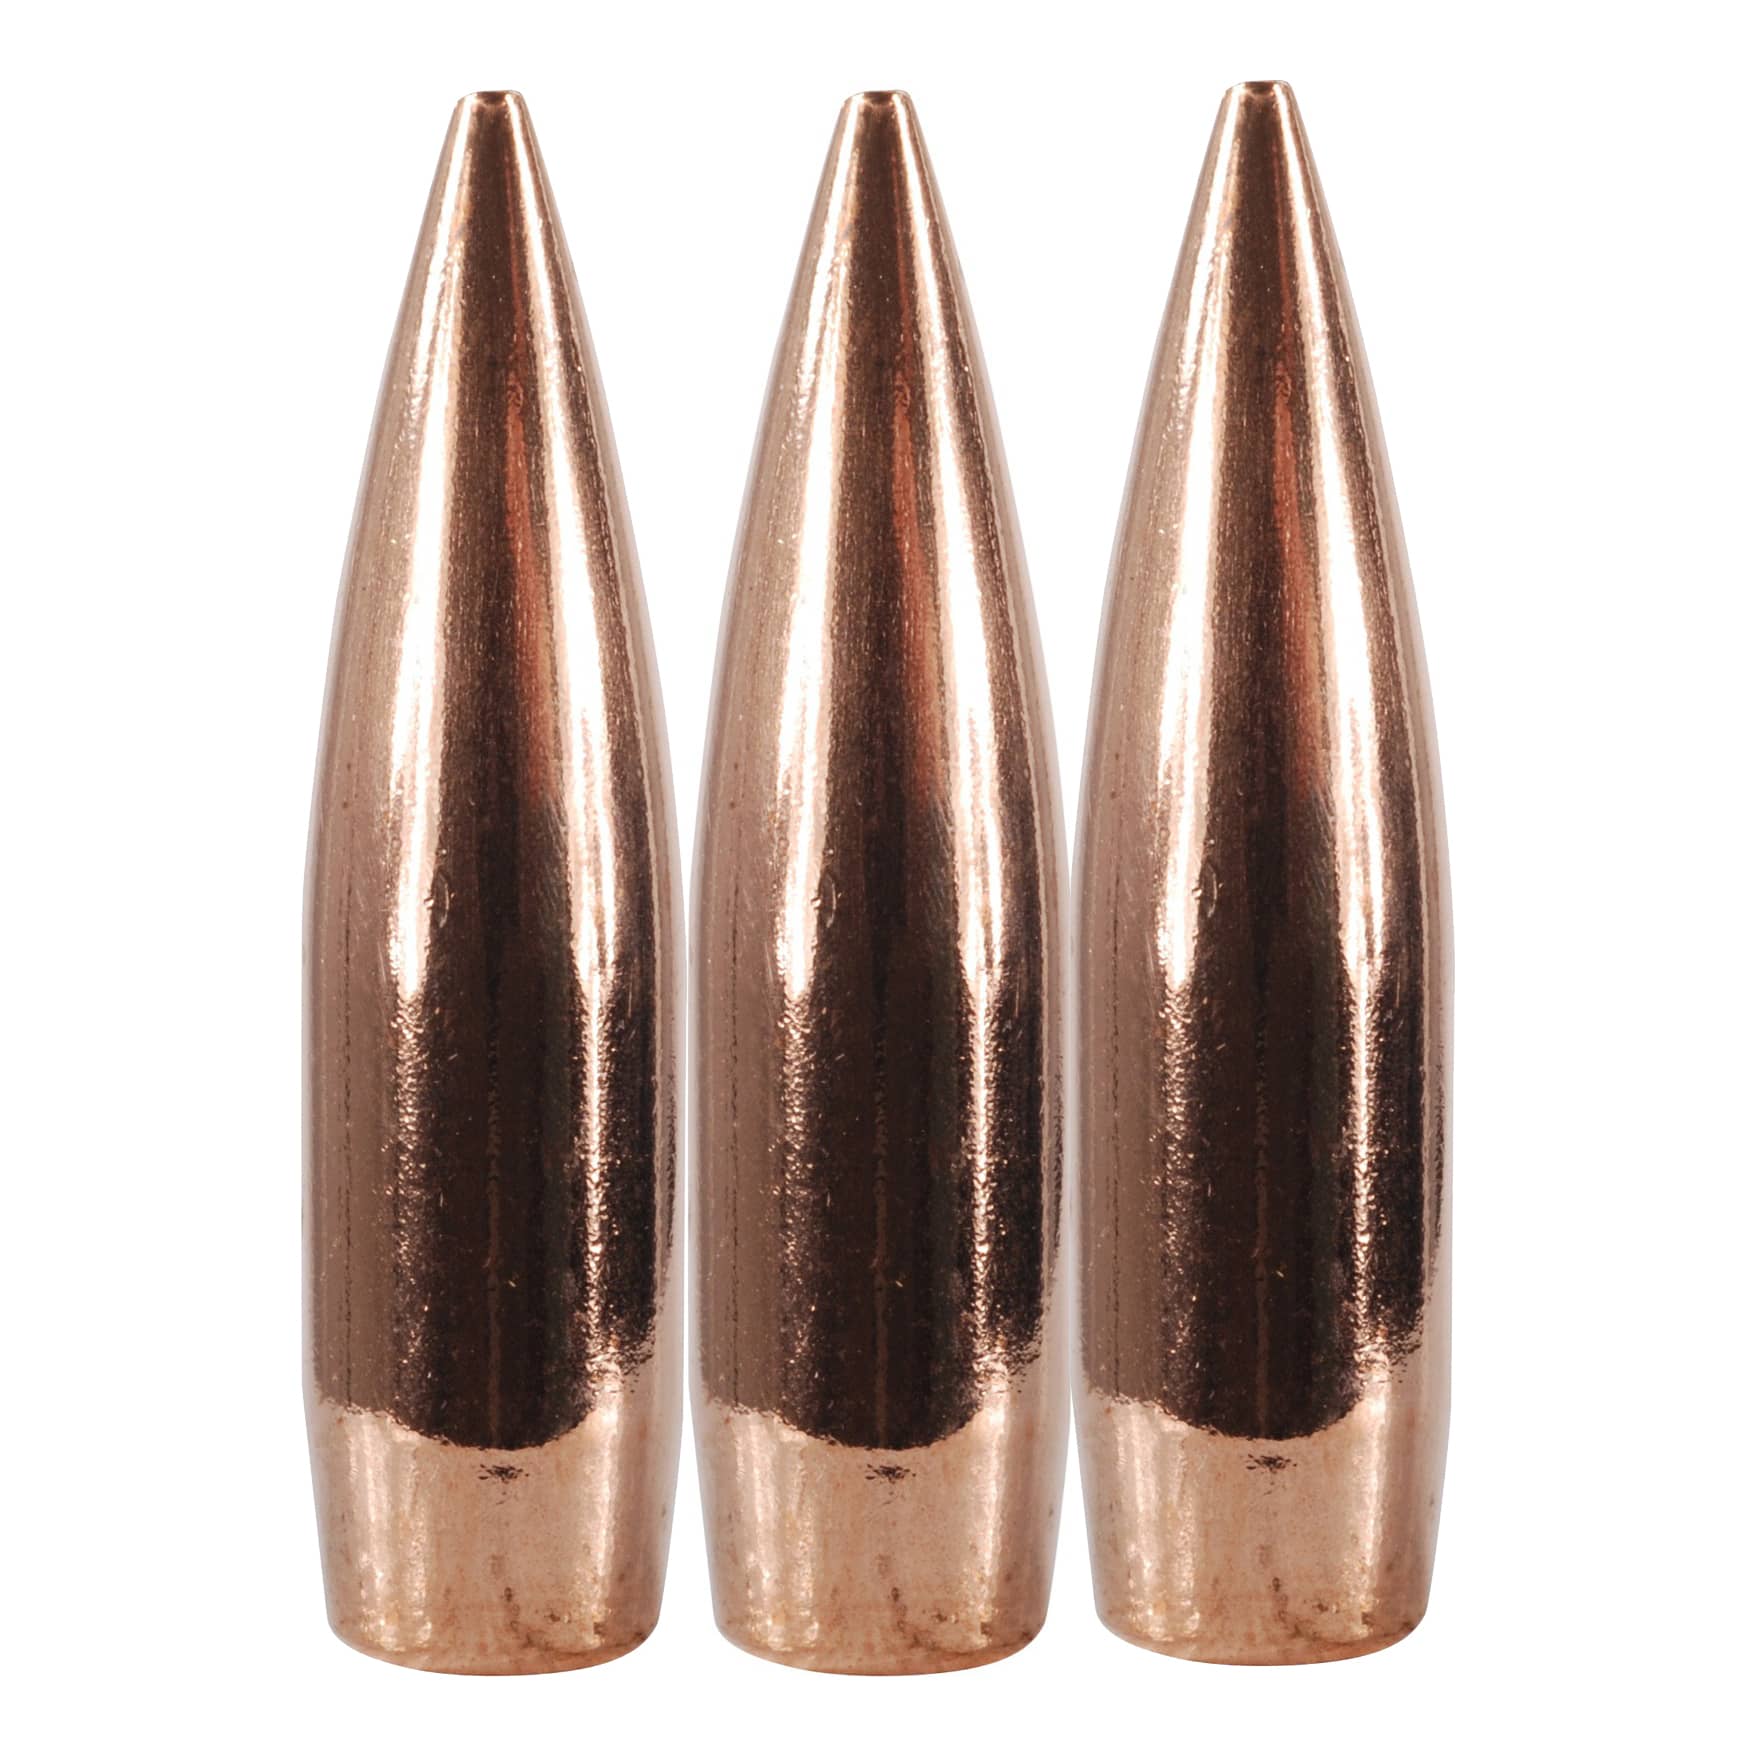 Berger Bullets  308 Winchester 168gr Classic Hunter